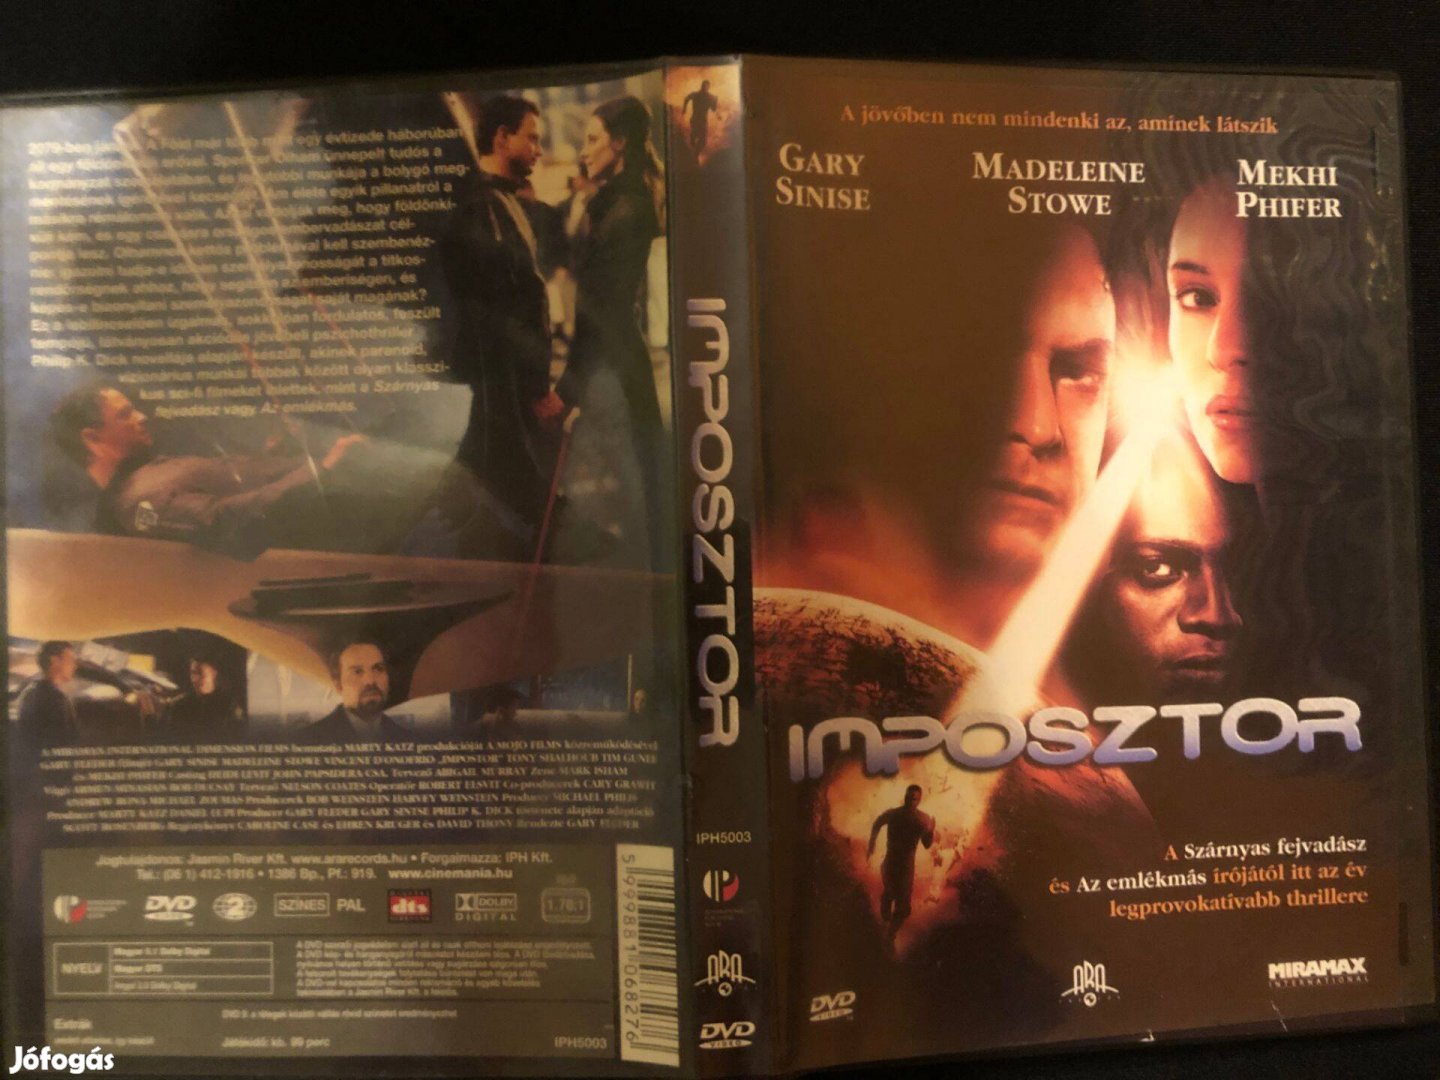 Imposztor DVD (karcmentes, Gary Sinise, Madeleine Stowe)